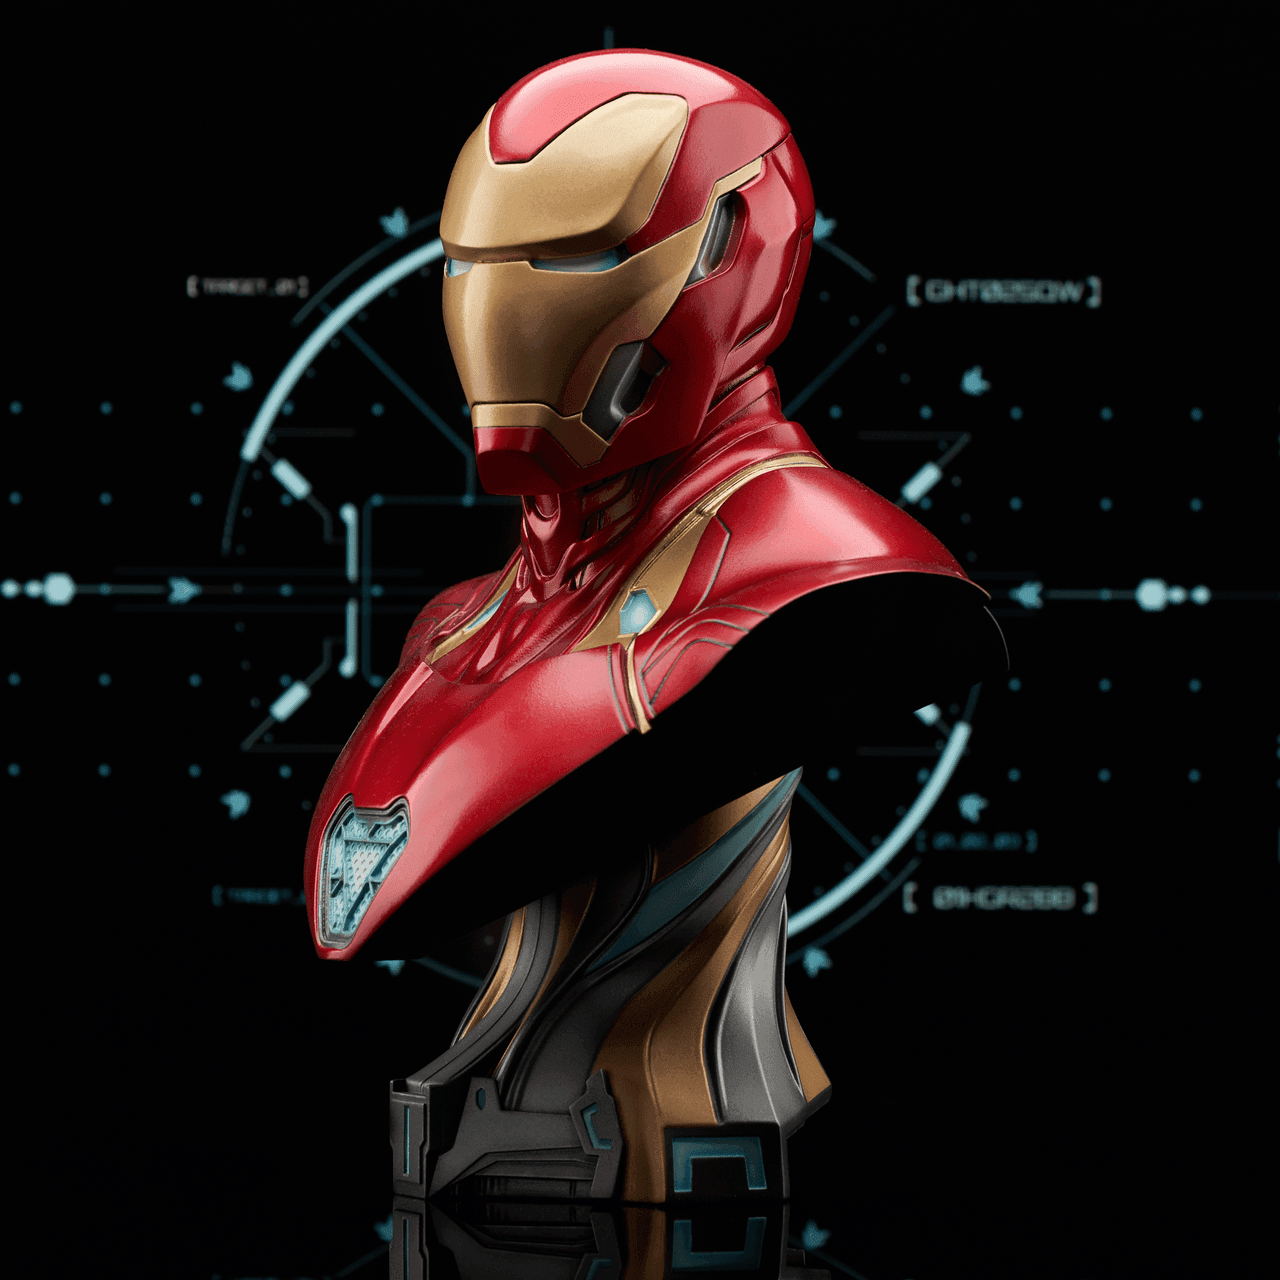 DSTAUG222404 Avengers 4: Endgame - Iron Man Mark L 1:2 Scale Bust - Diamond Select Toys - Titan Pop Culture